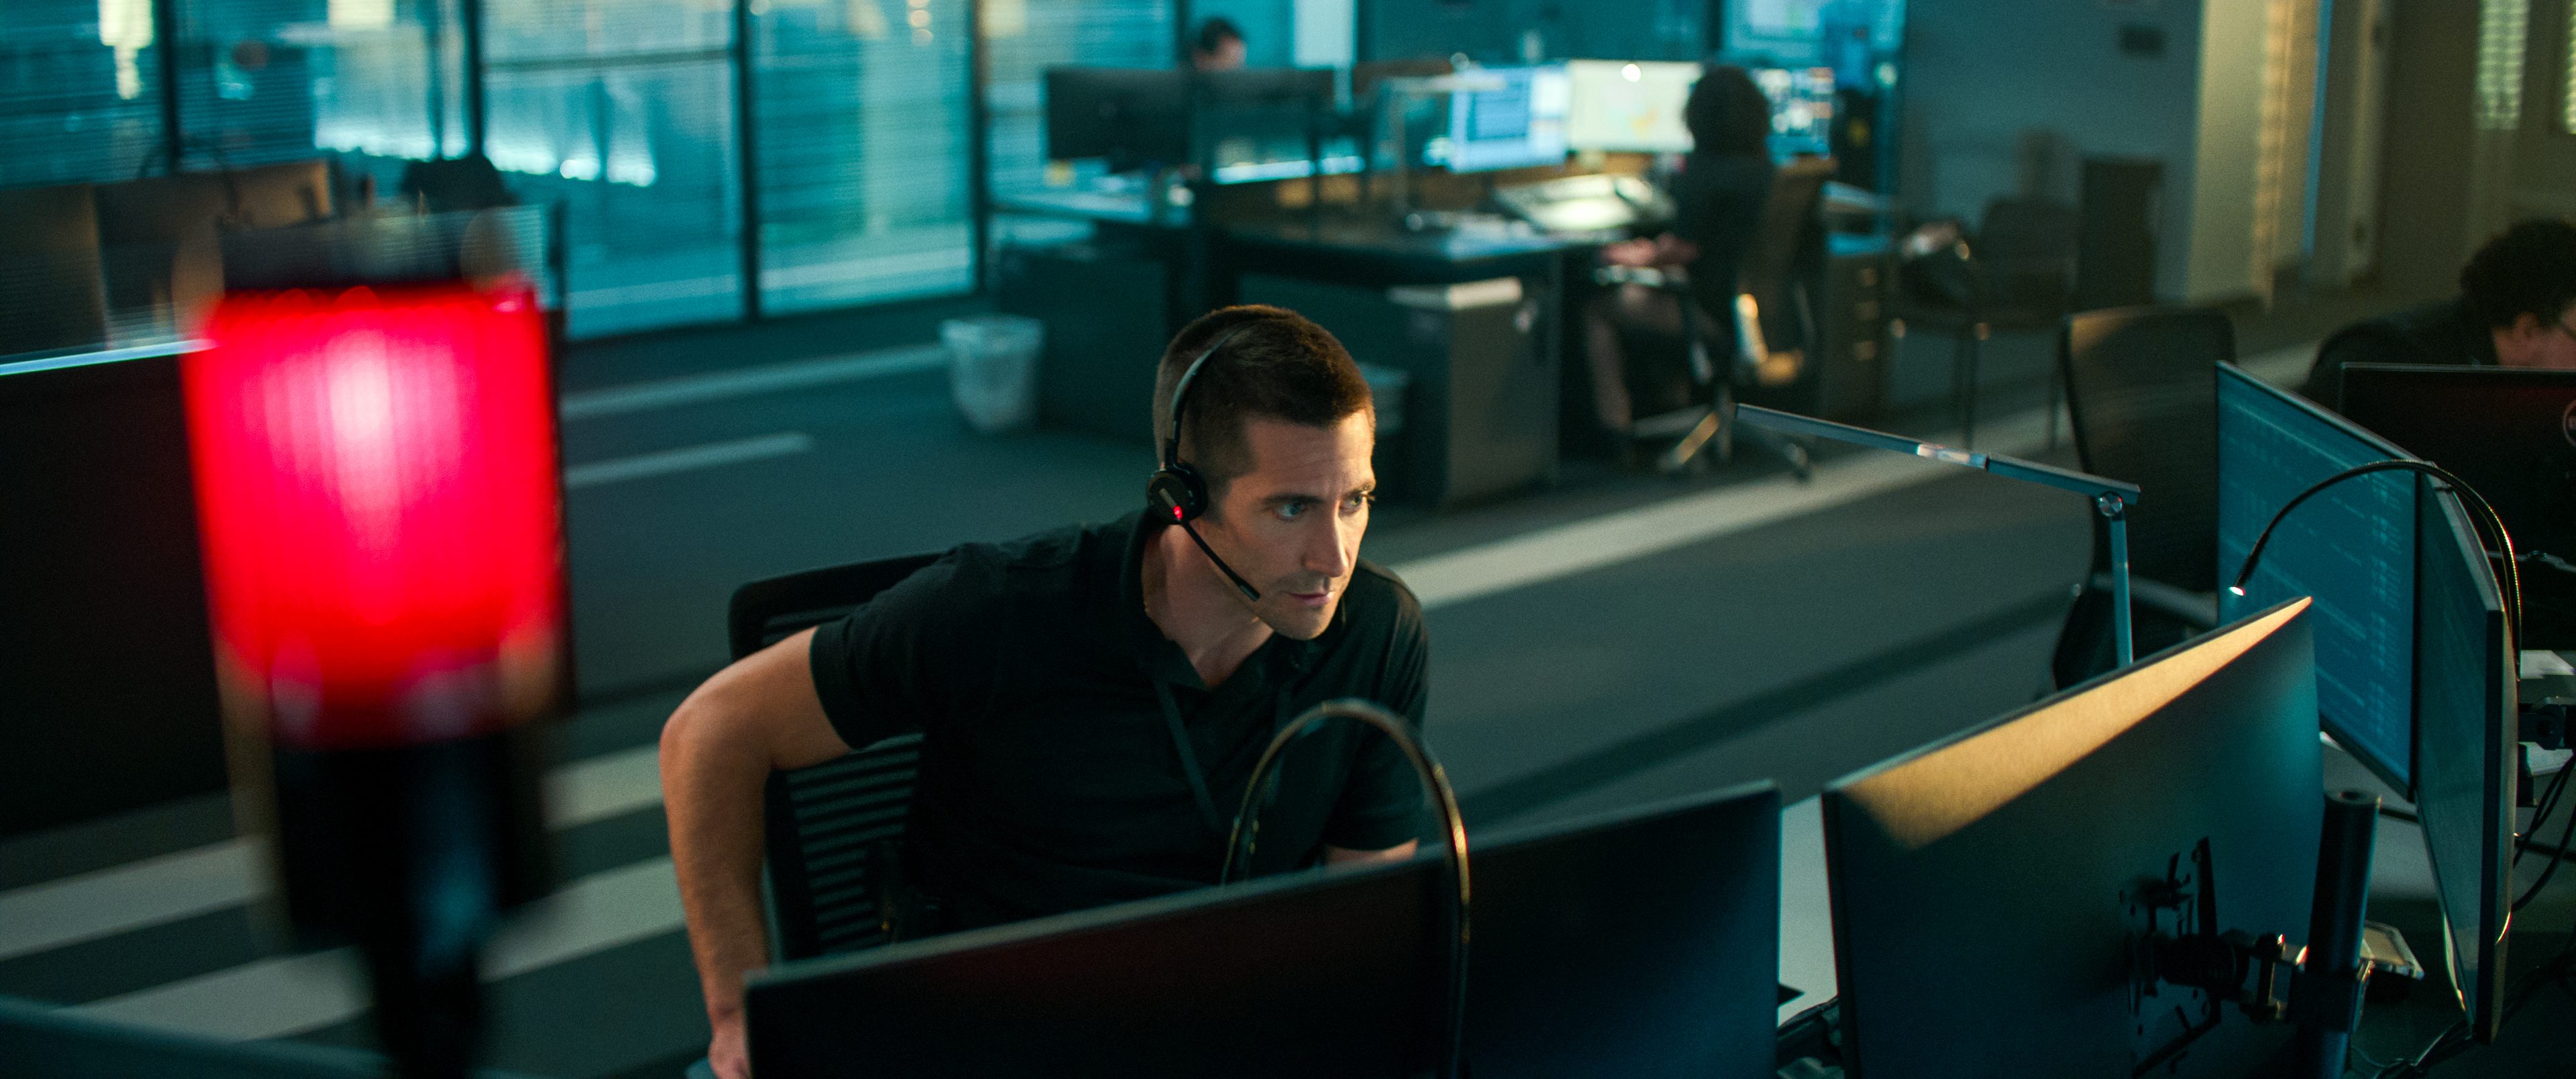 WATCH: Jake Gyllenhaal stars in Netflix remake of ‘The Guilty’